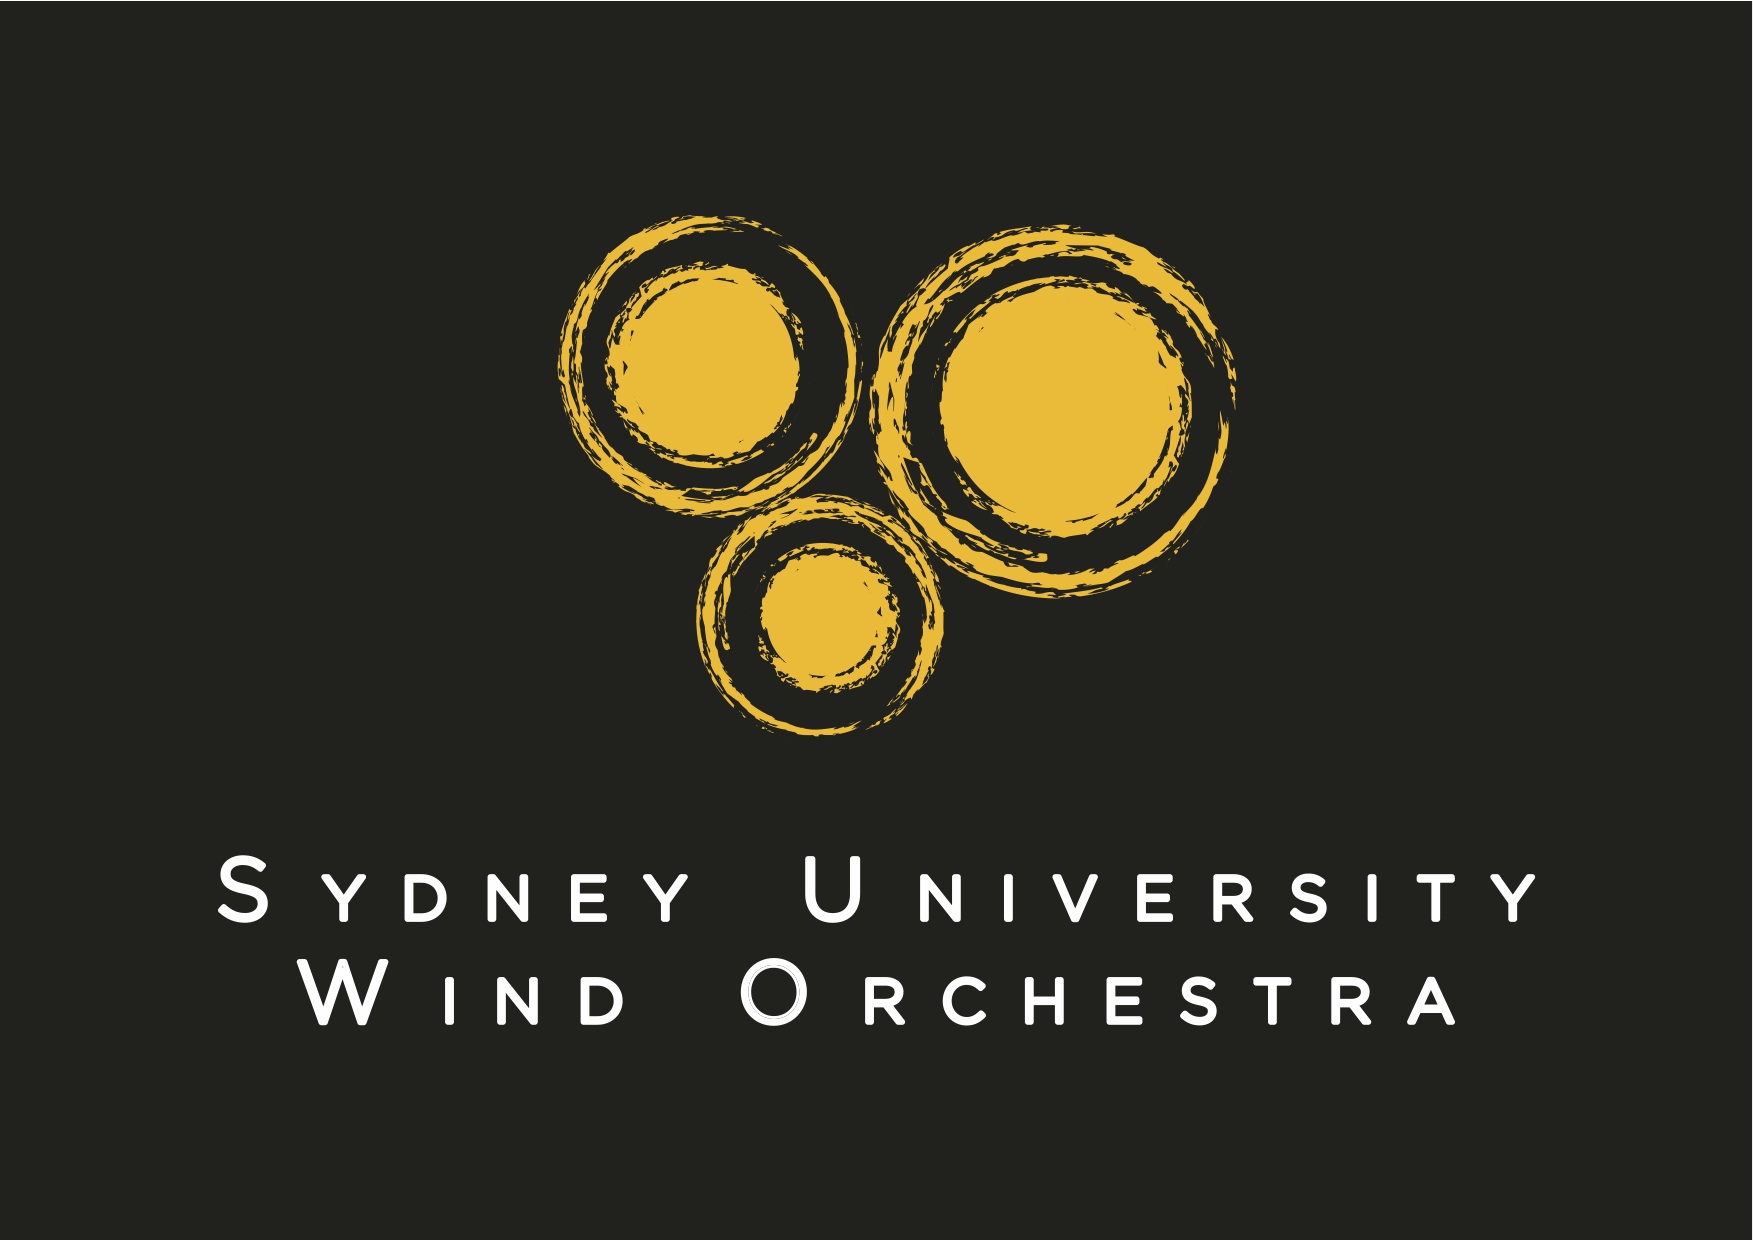 Wind Orchestra